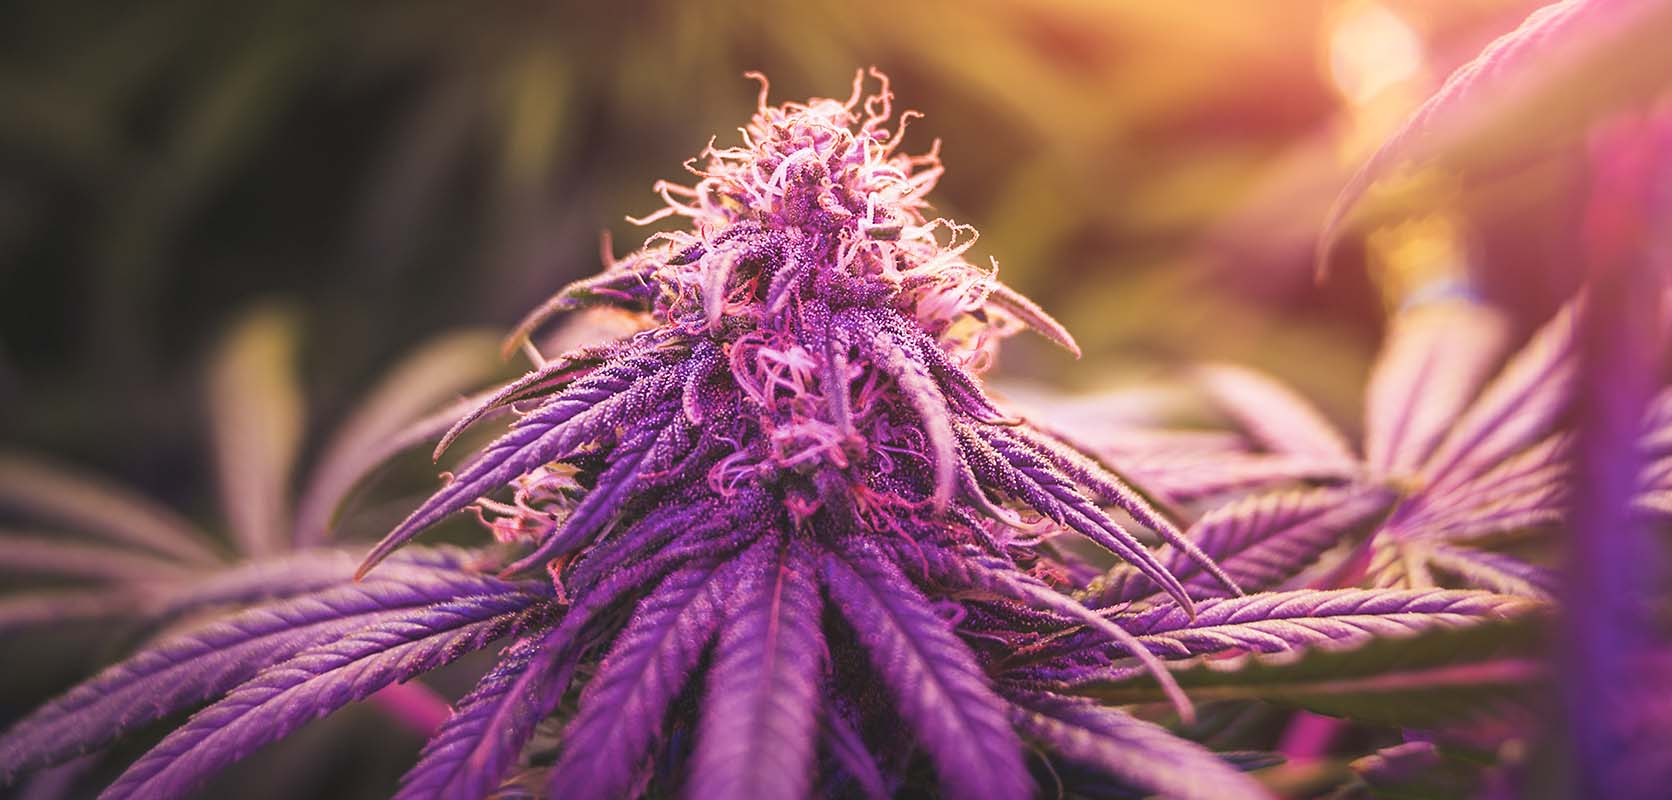 What Is Purple Haze Weed?